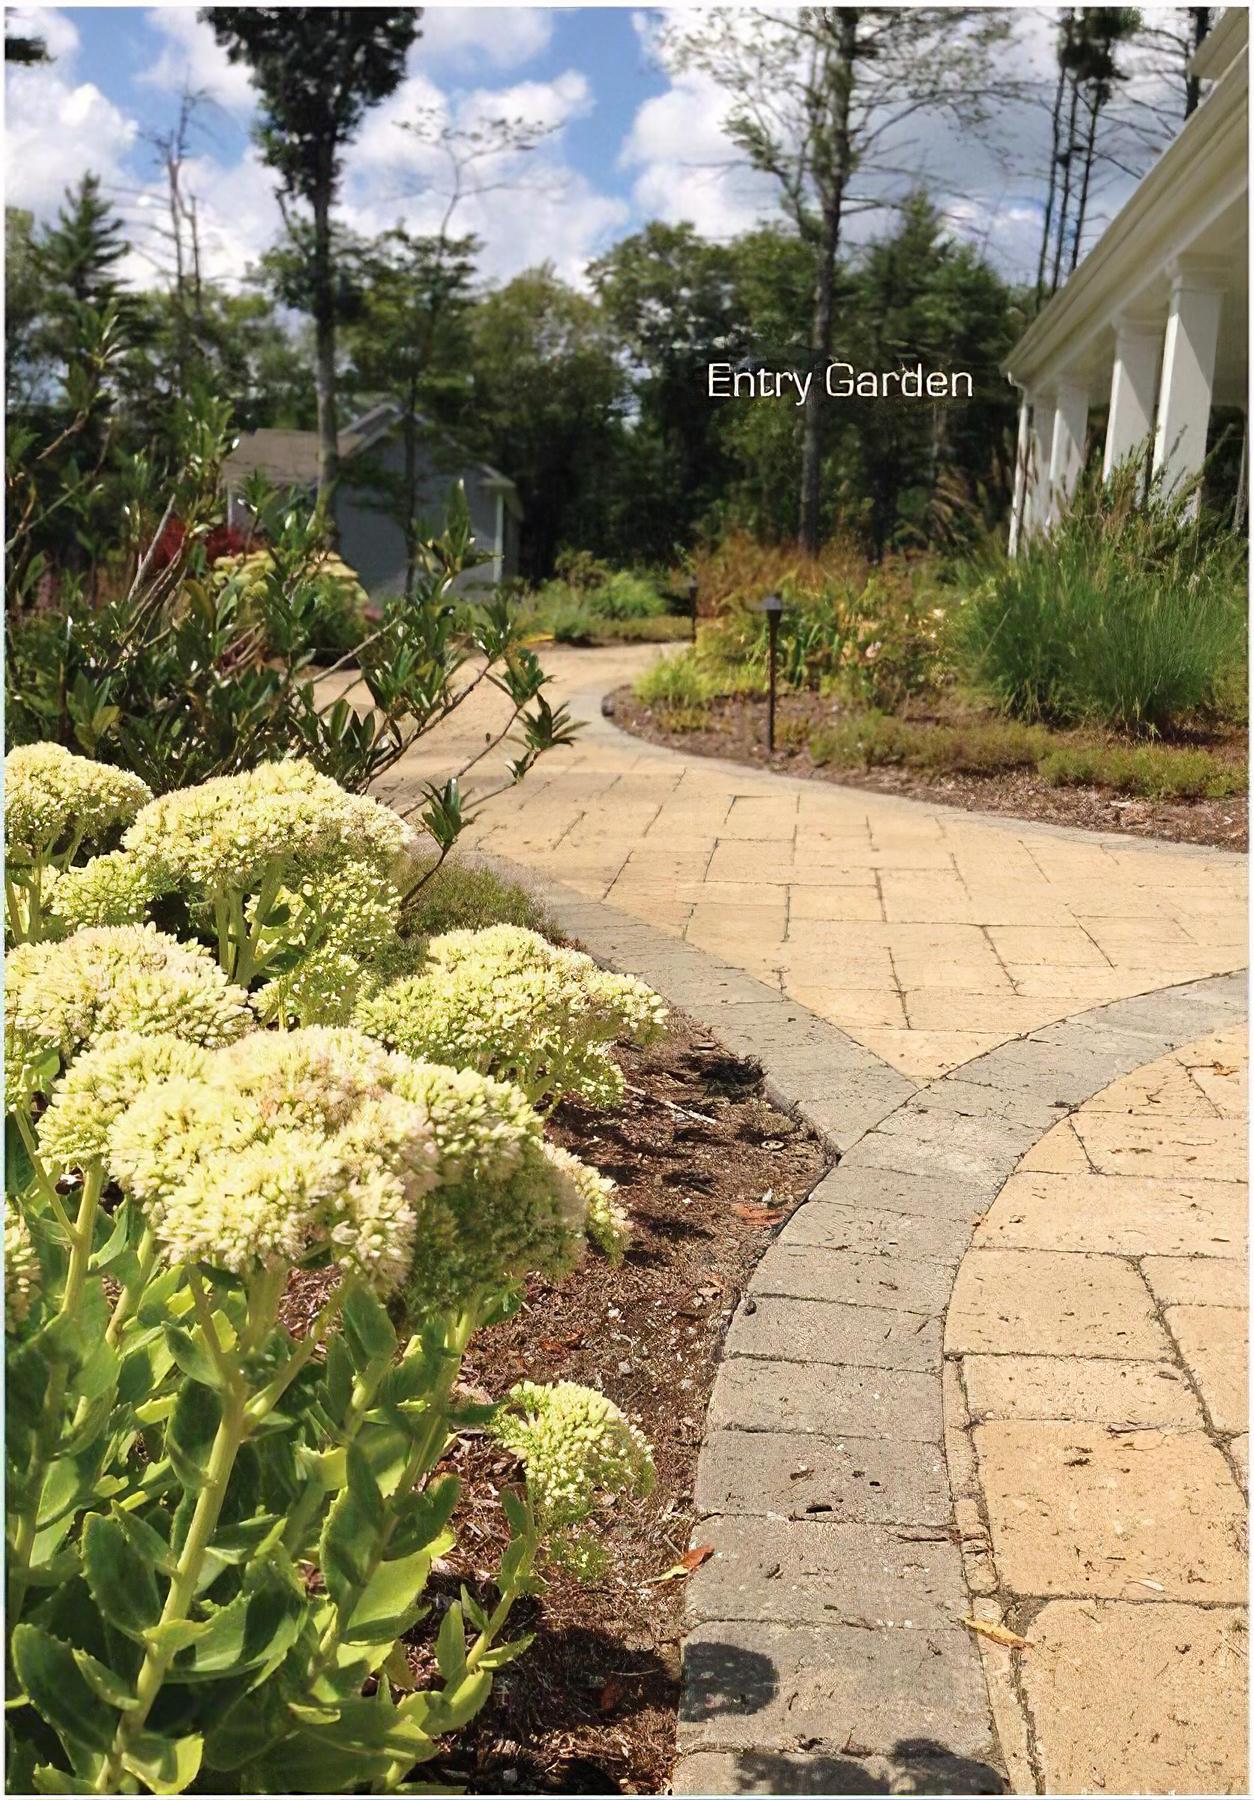 A Multi-generational Suburban Home Garden by Rhode Island garden designer Shawn Mayers.